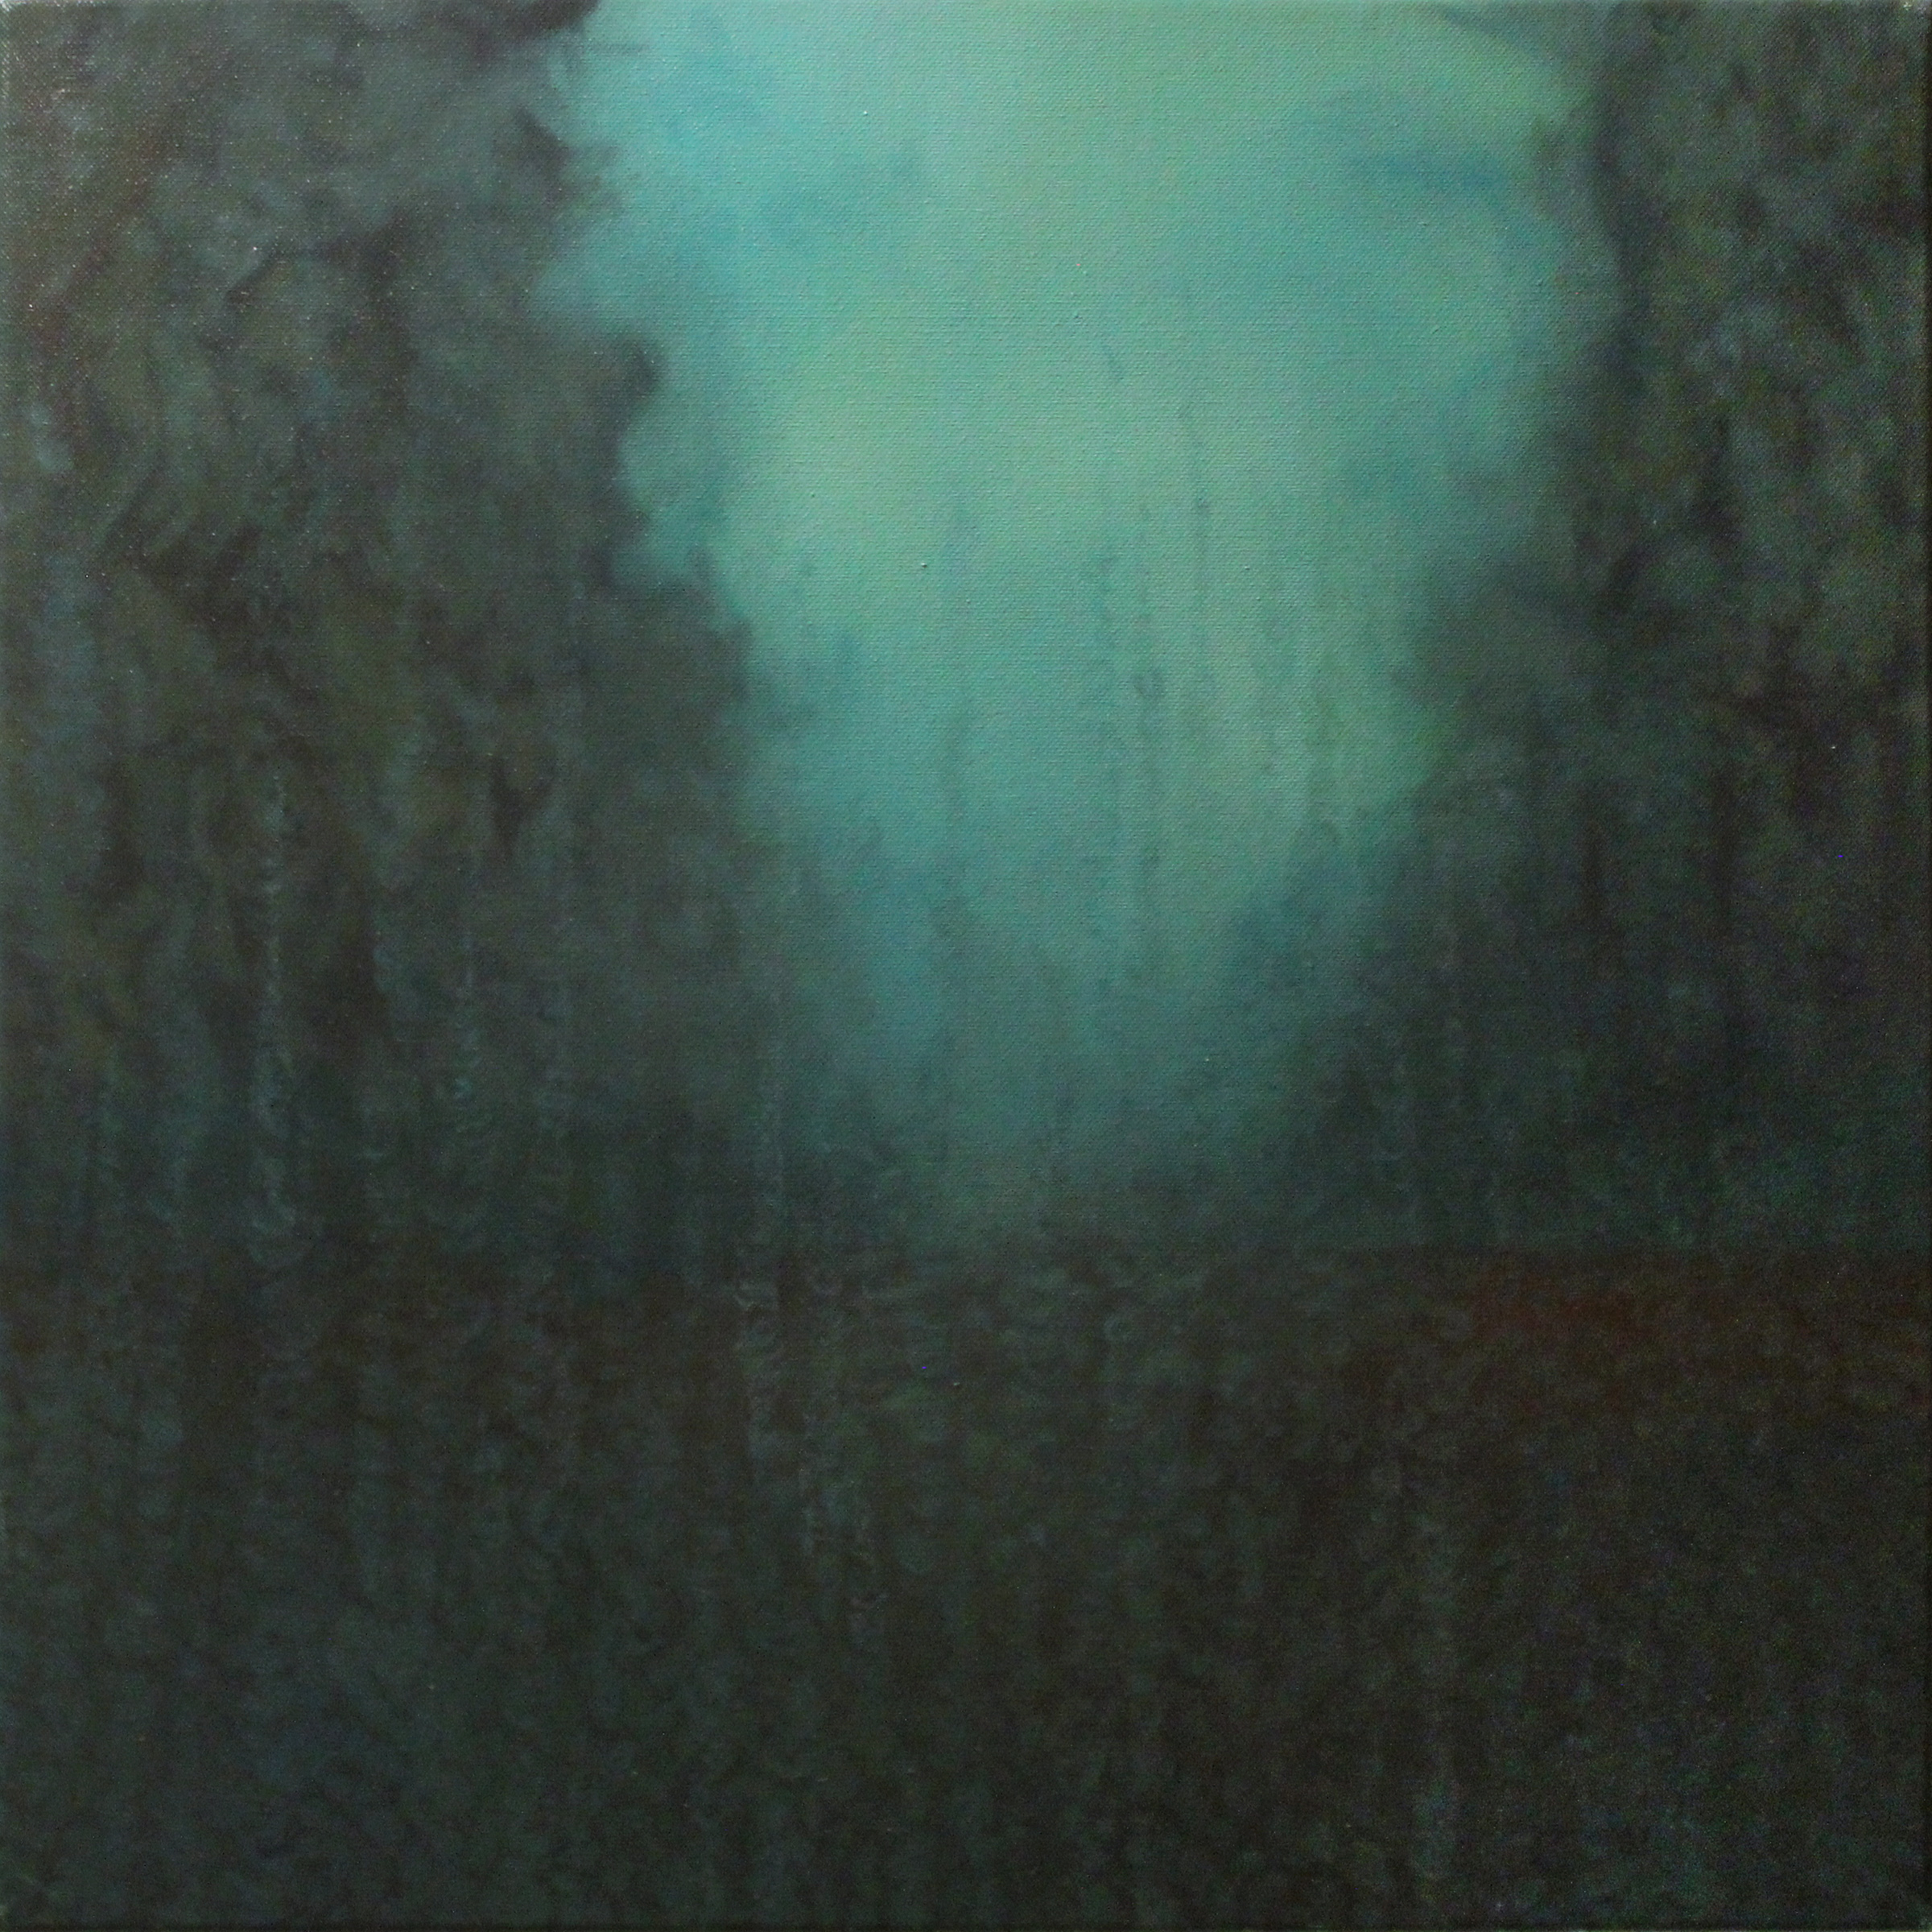 Rainy Window / Scotland, 2007, 20 x 20", oil on canvas